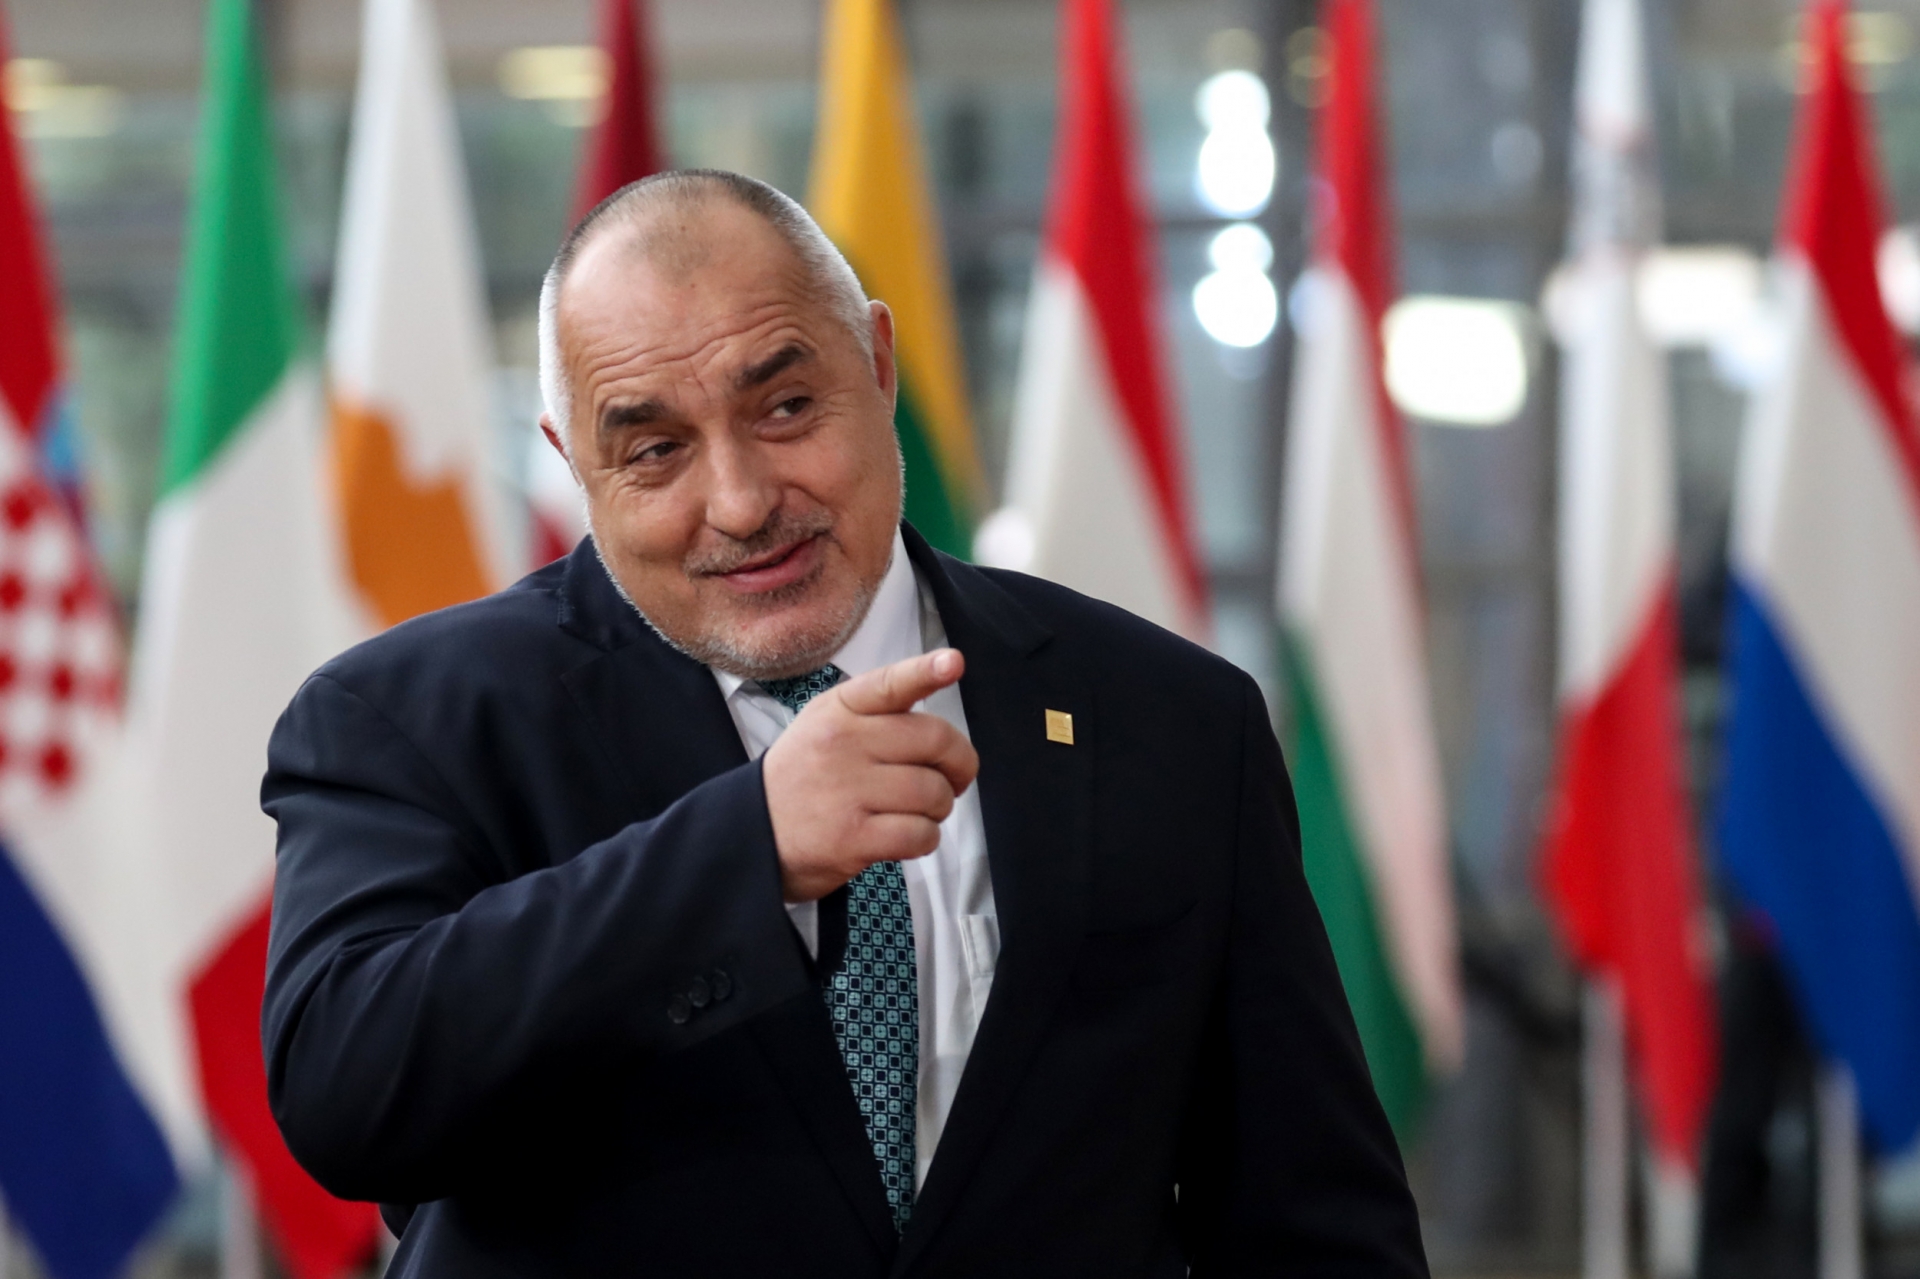 Borissov fined for not wearing mask 